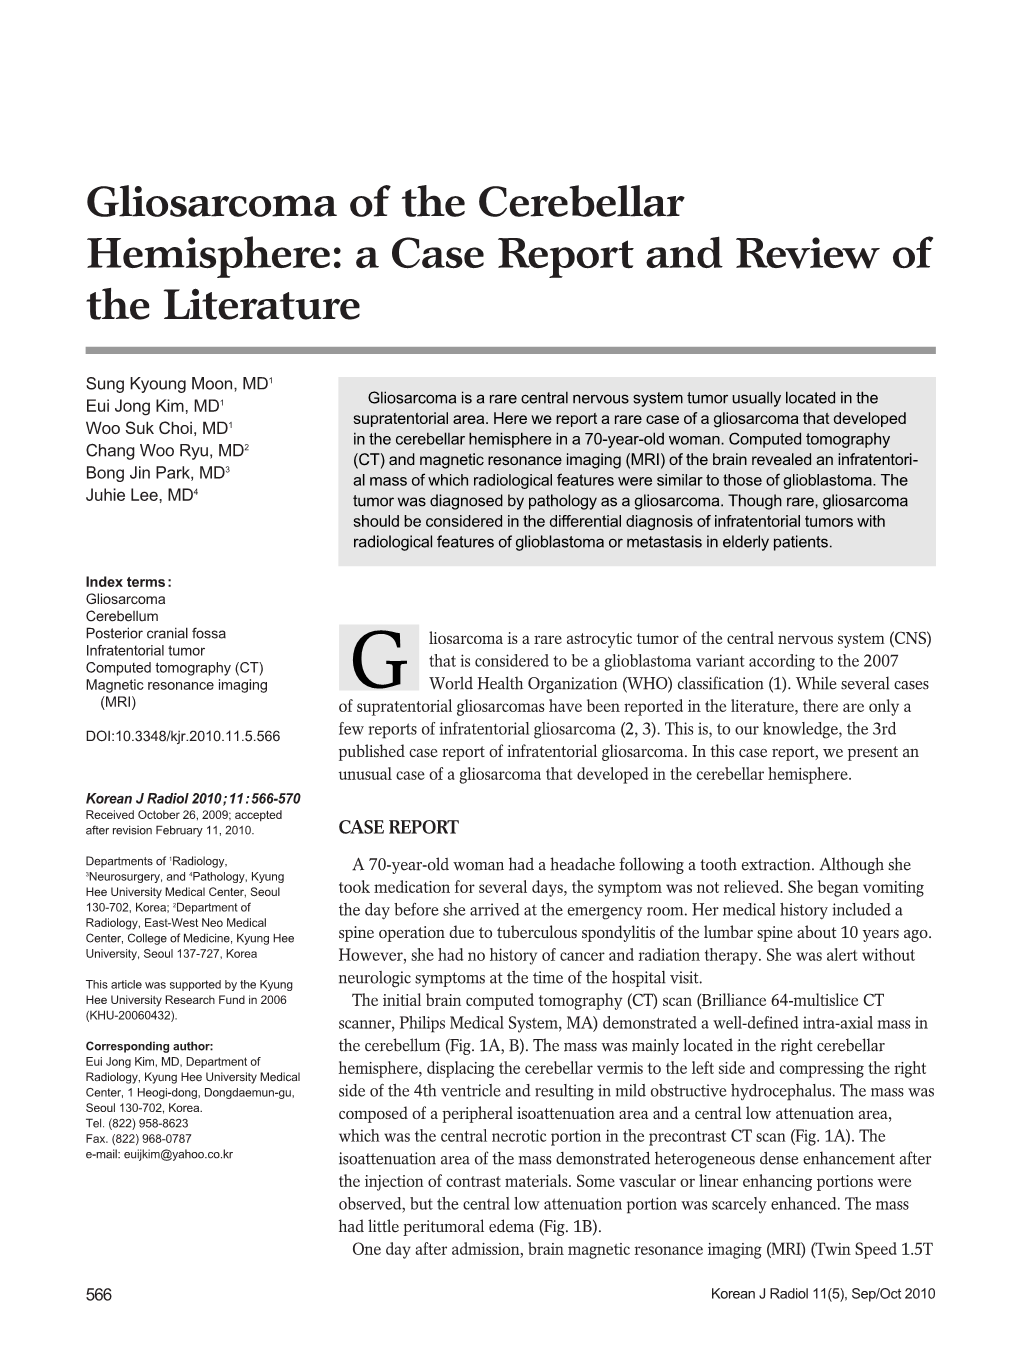 Gliosarcoma of the Cerebellar Hemisphere: a Case Report and Review of the Literature